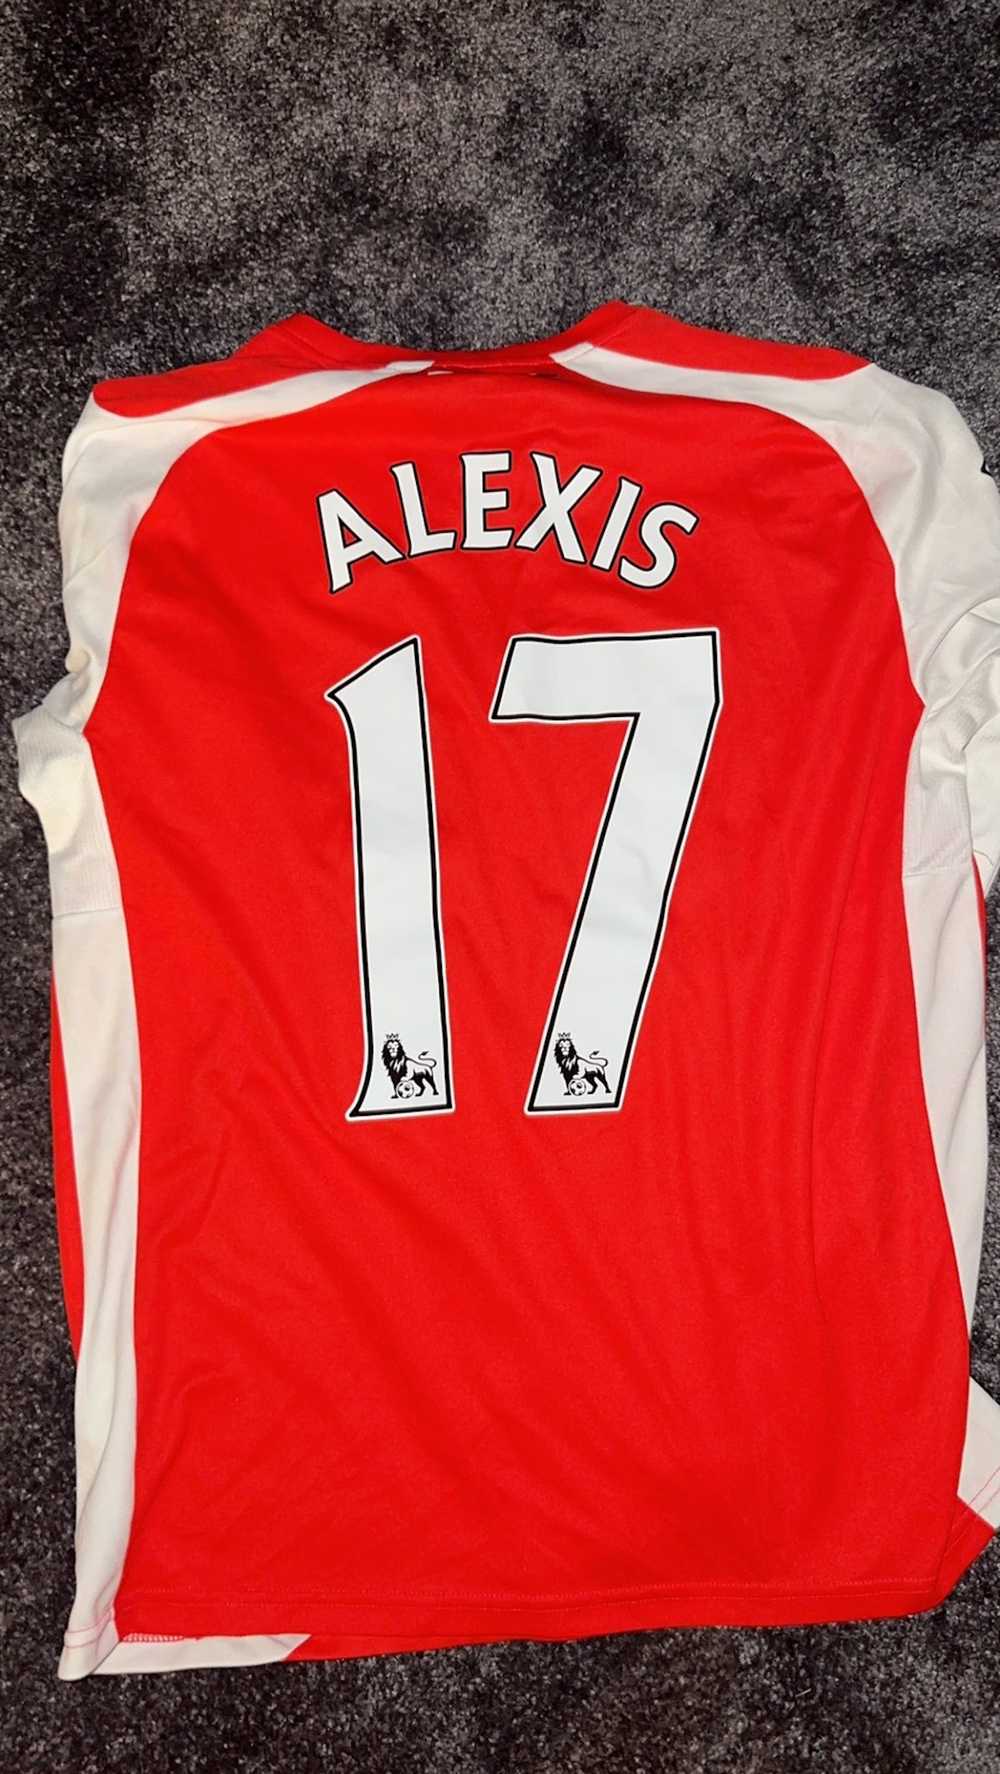 Puma Alexis Sanchez Longsleeve Arsenal Jersey - image 2